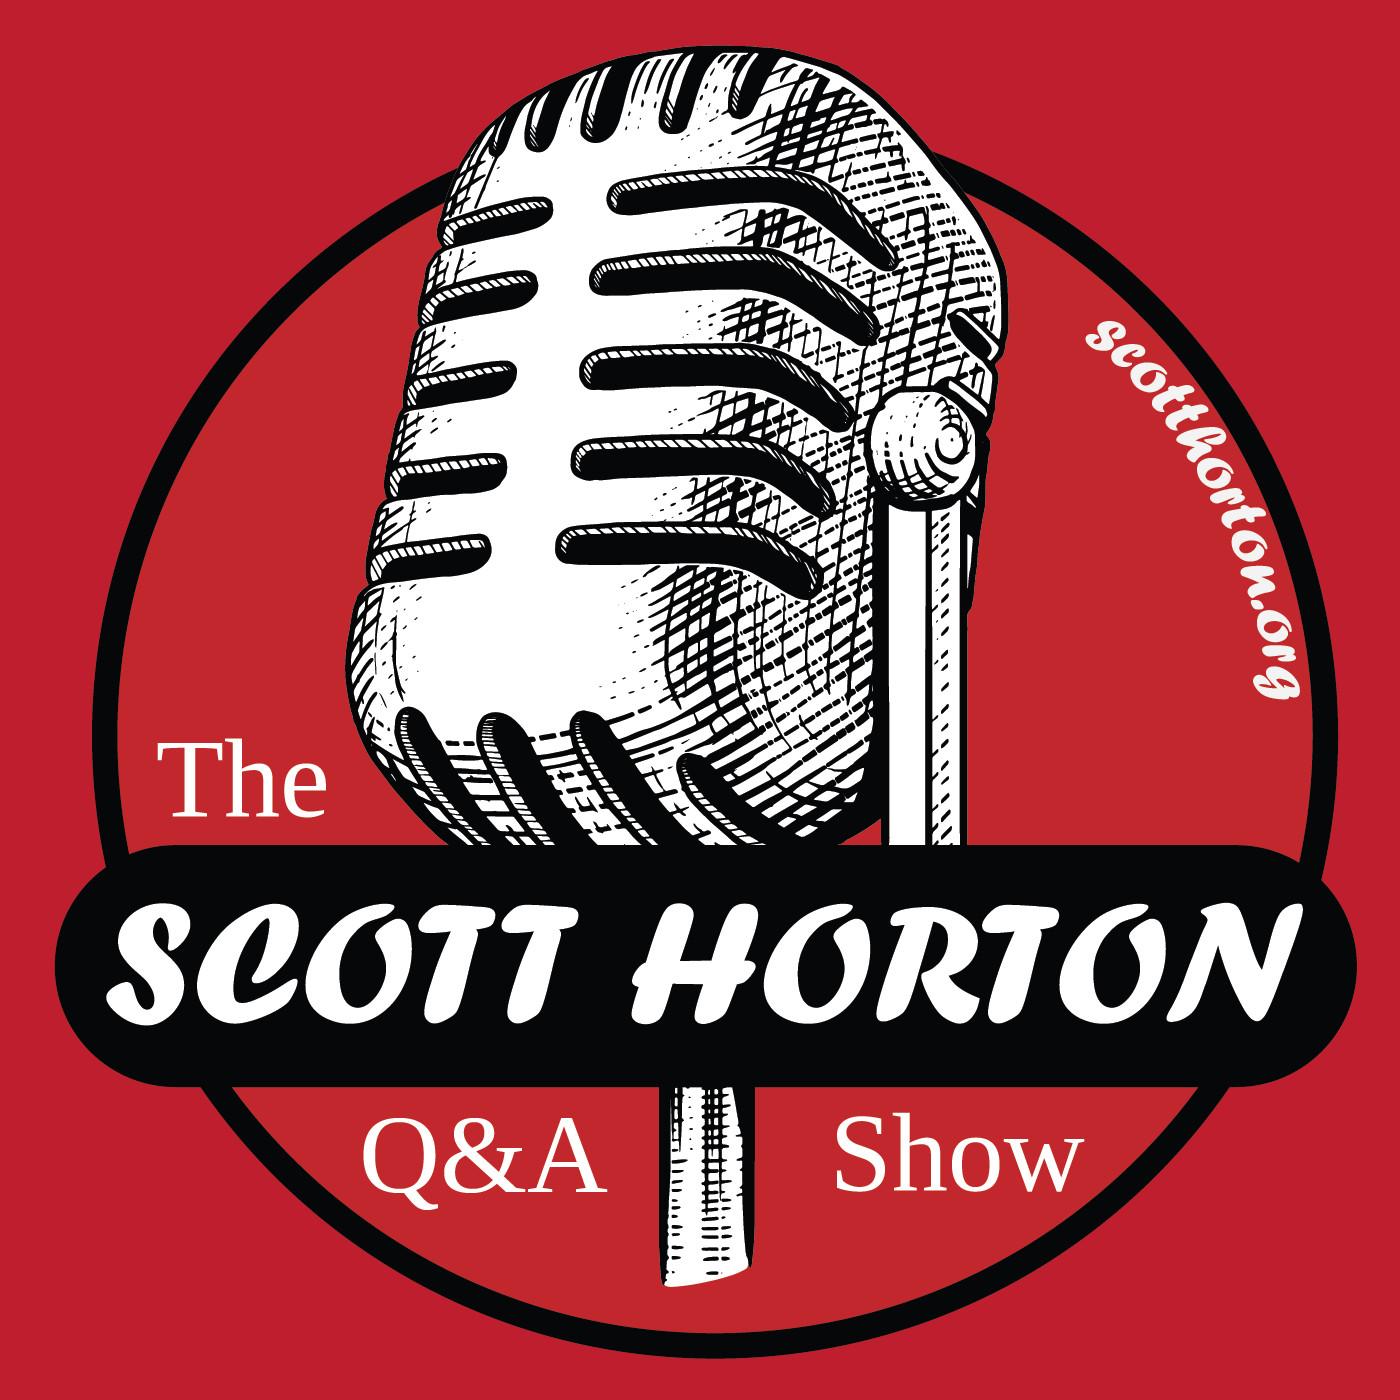 Scott Horton Show - Q & A Shows